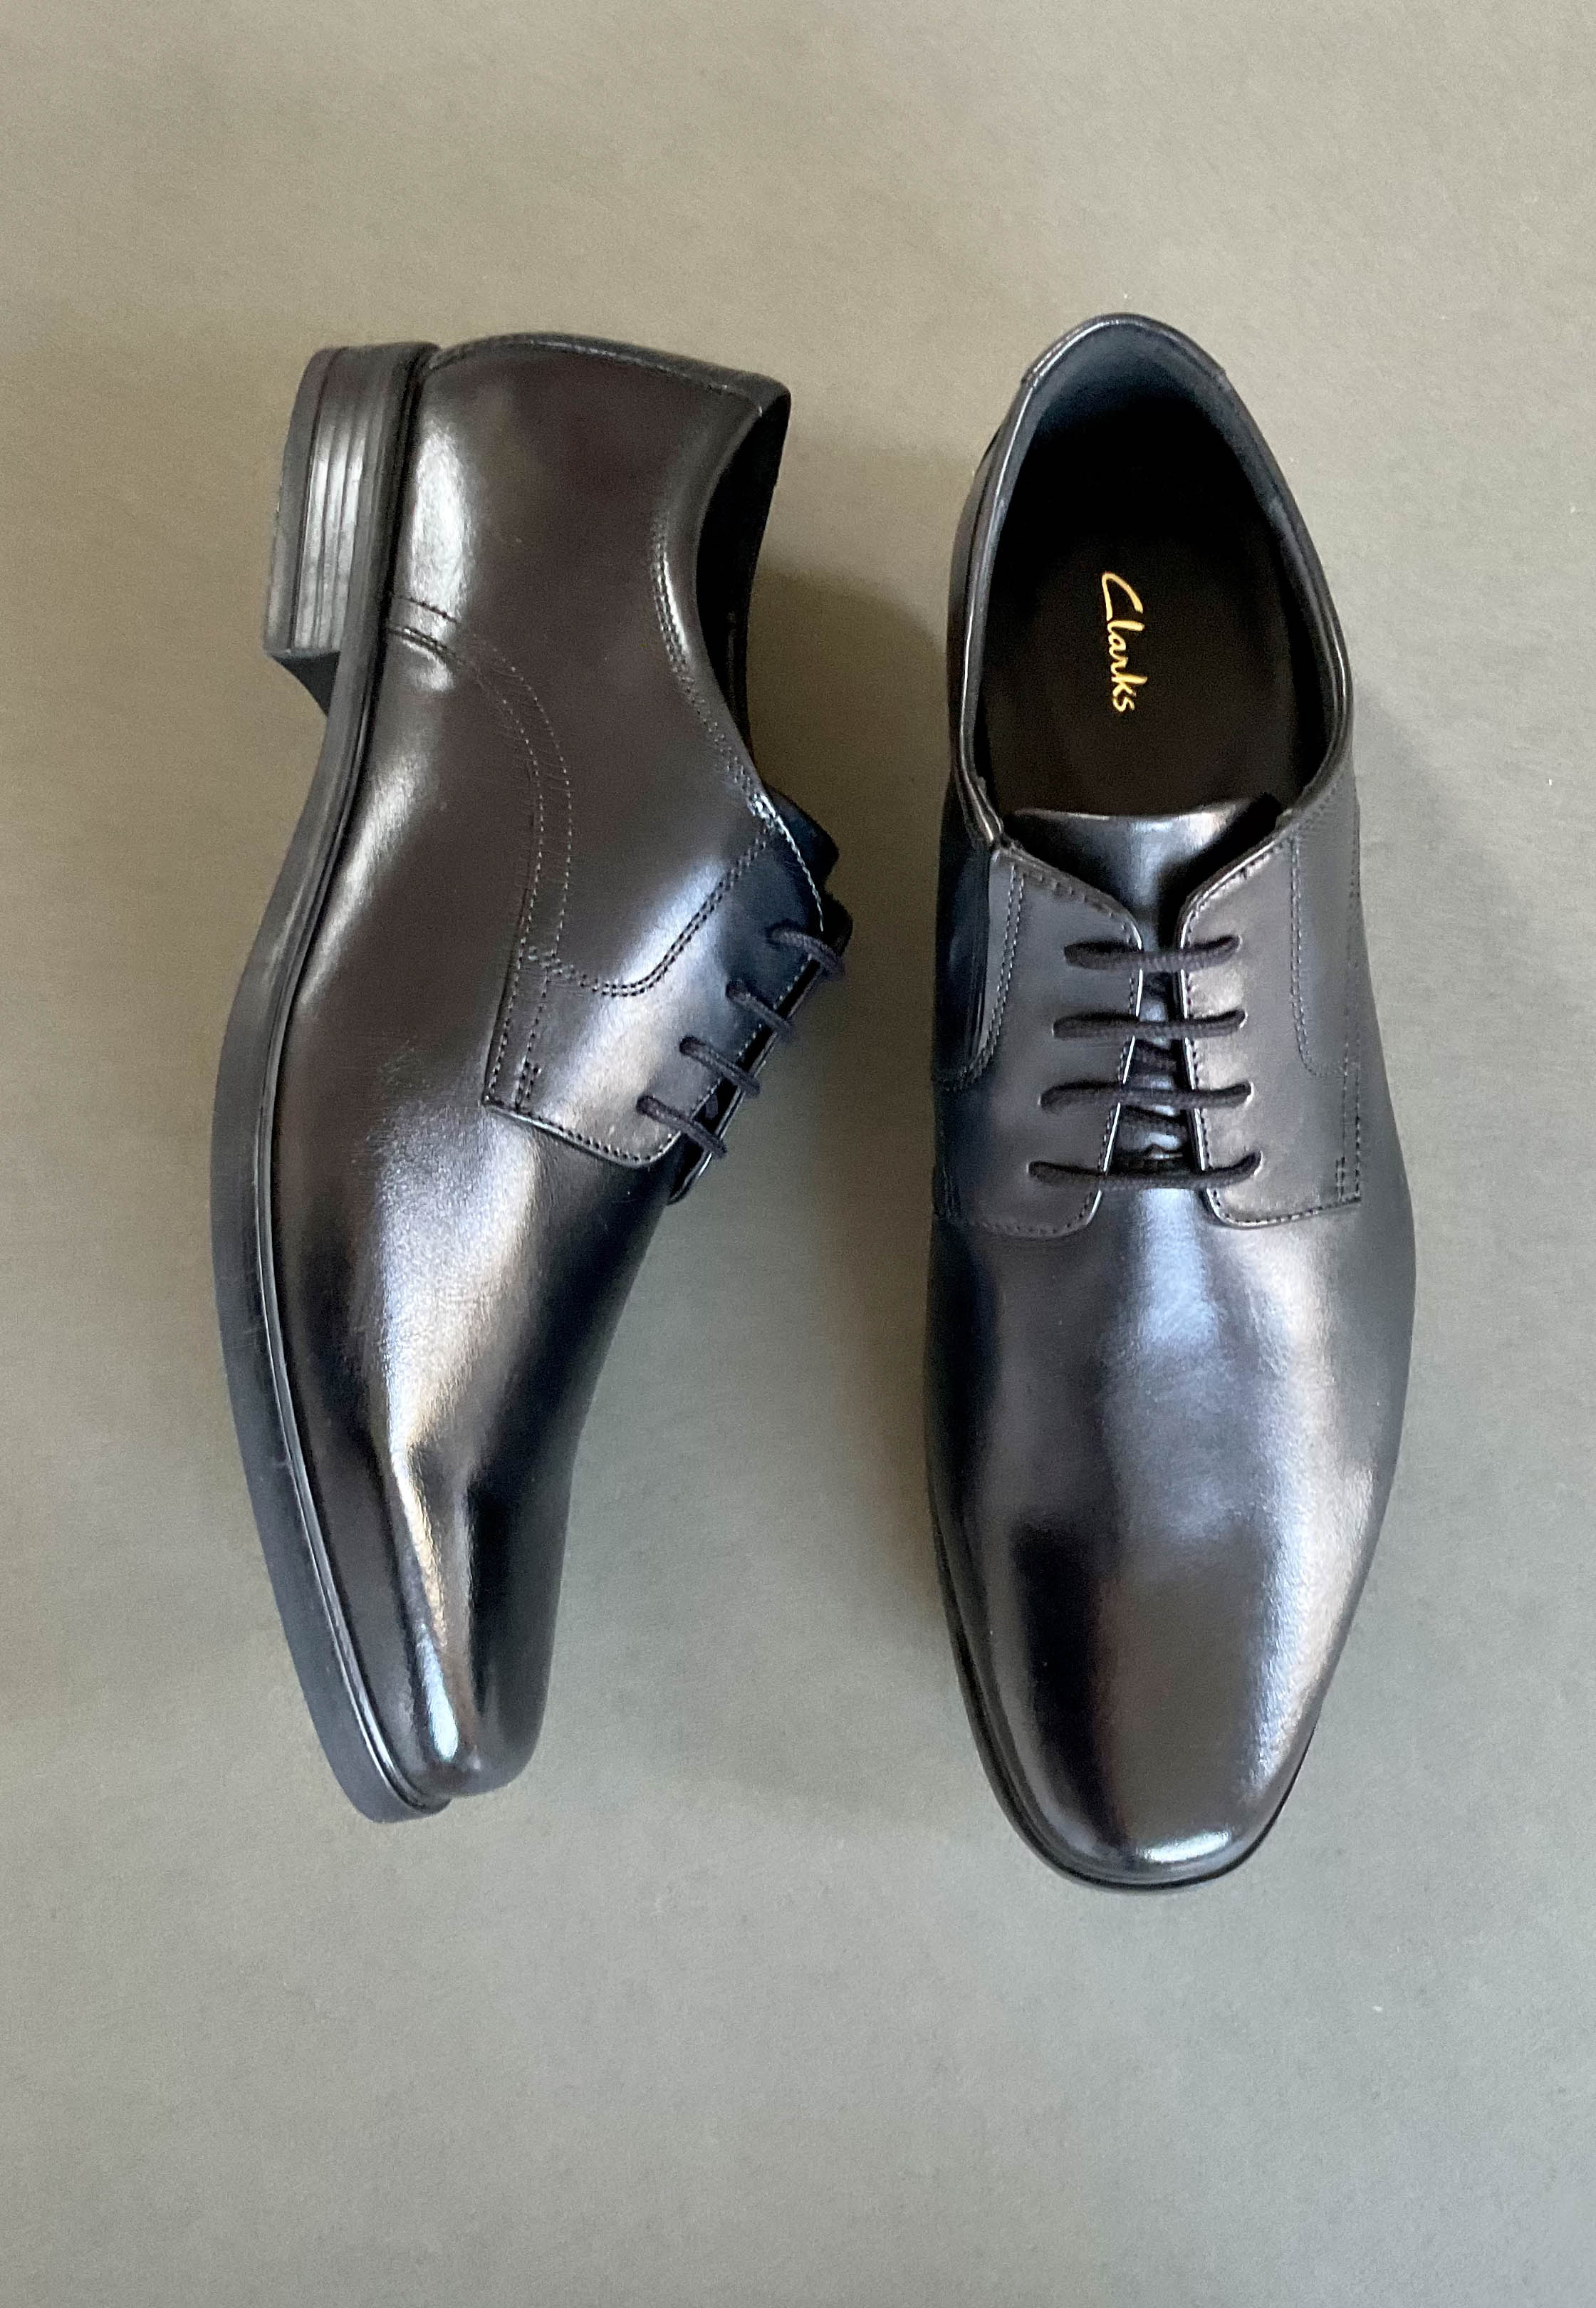 clarks dress shoes for men